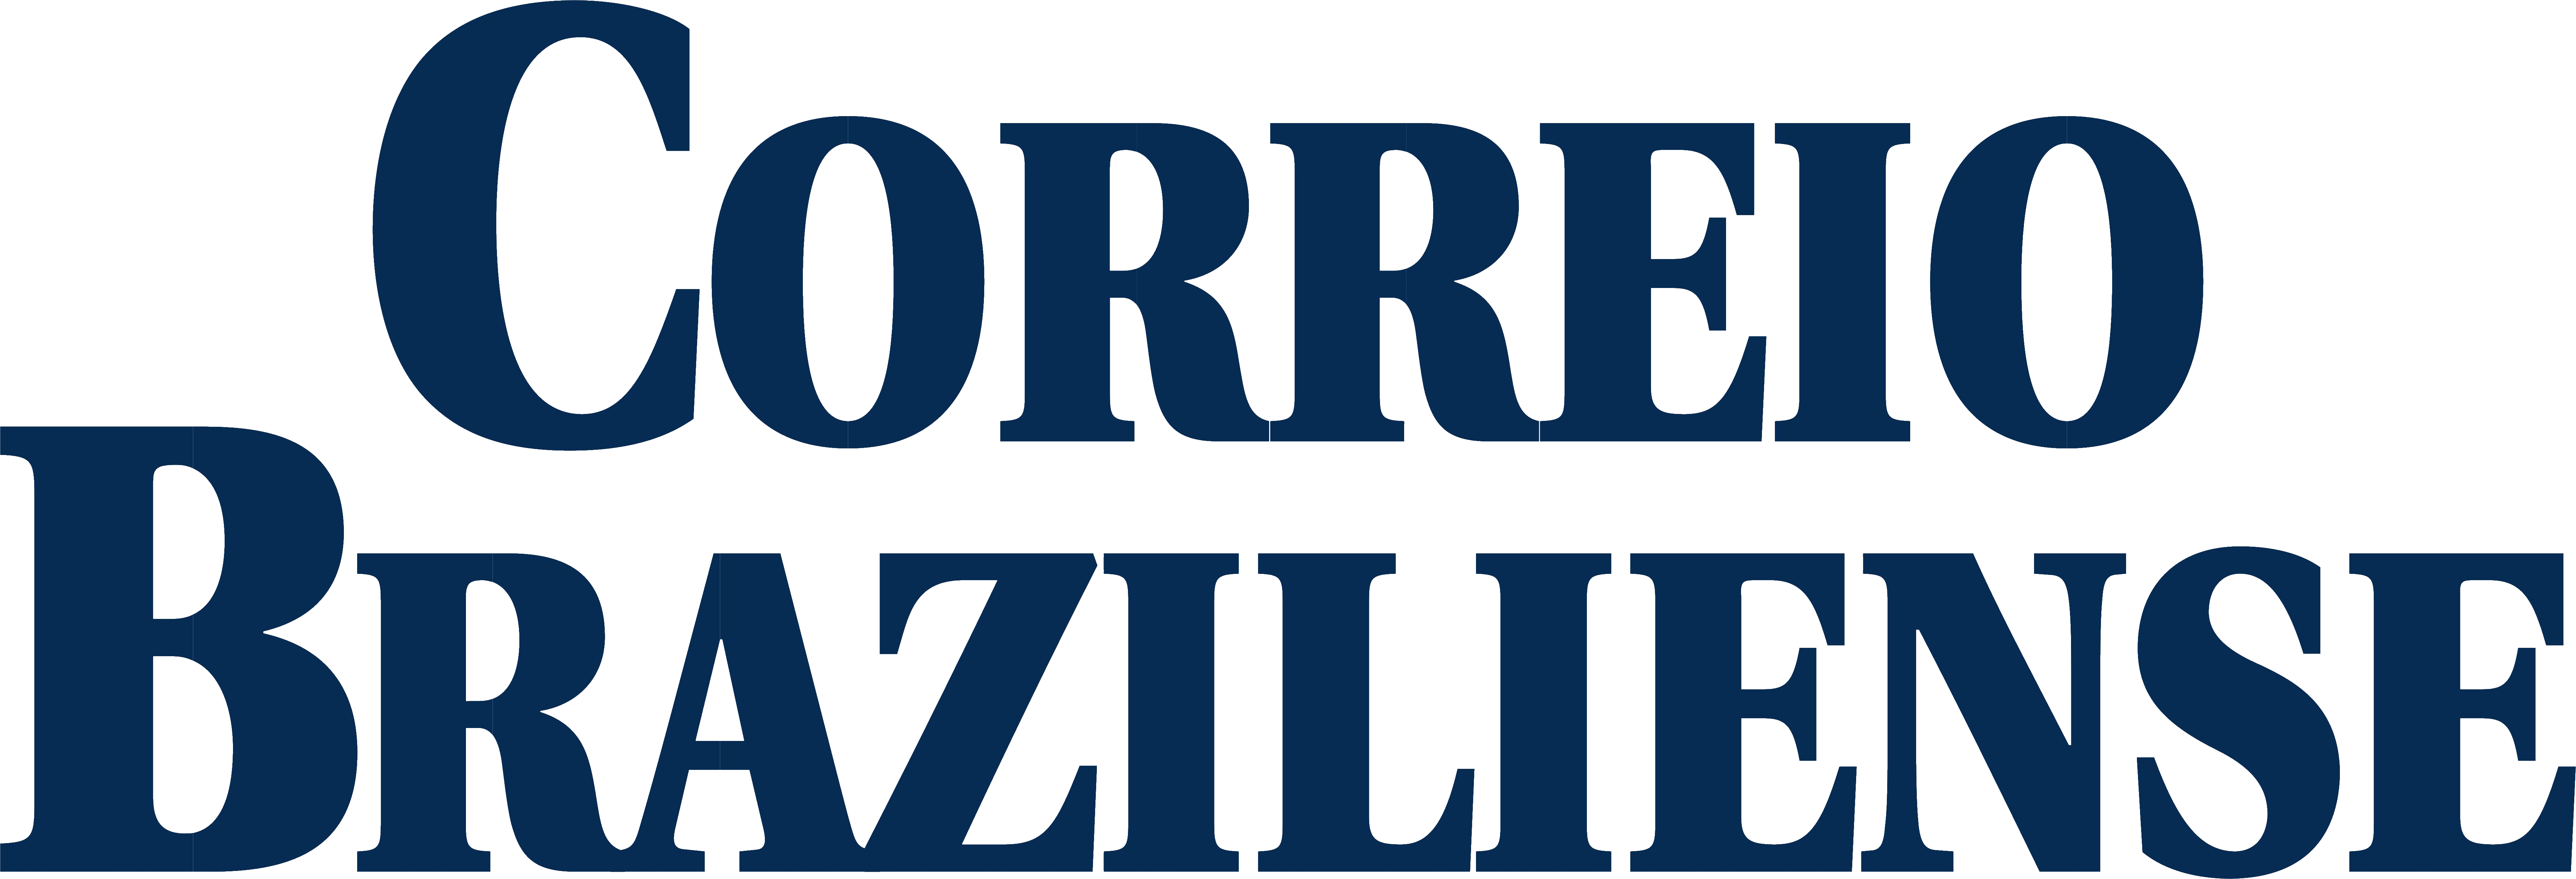 Logo do Correio Braziliense